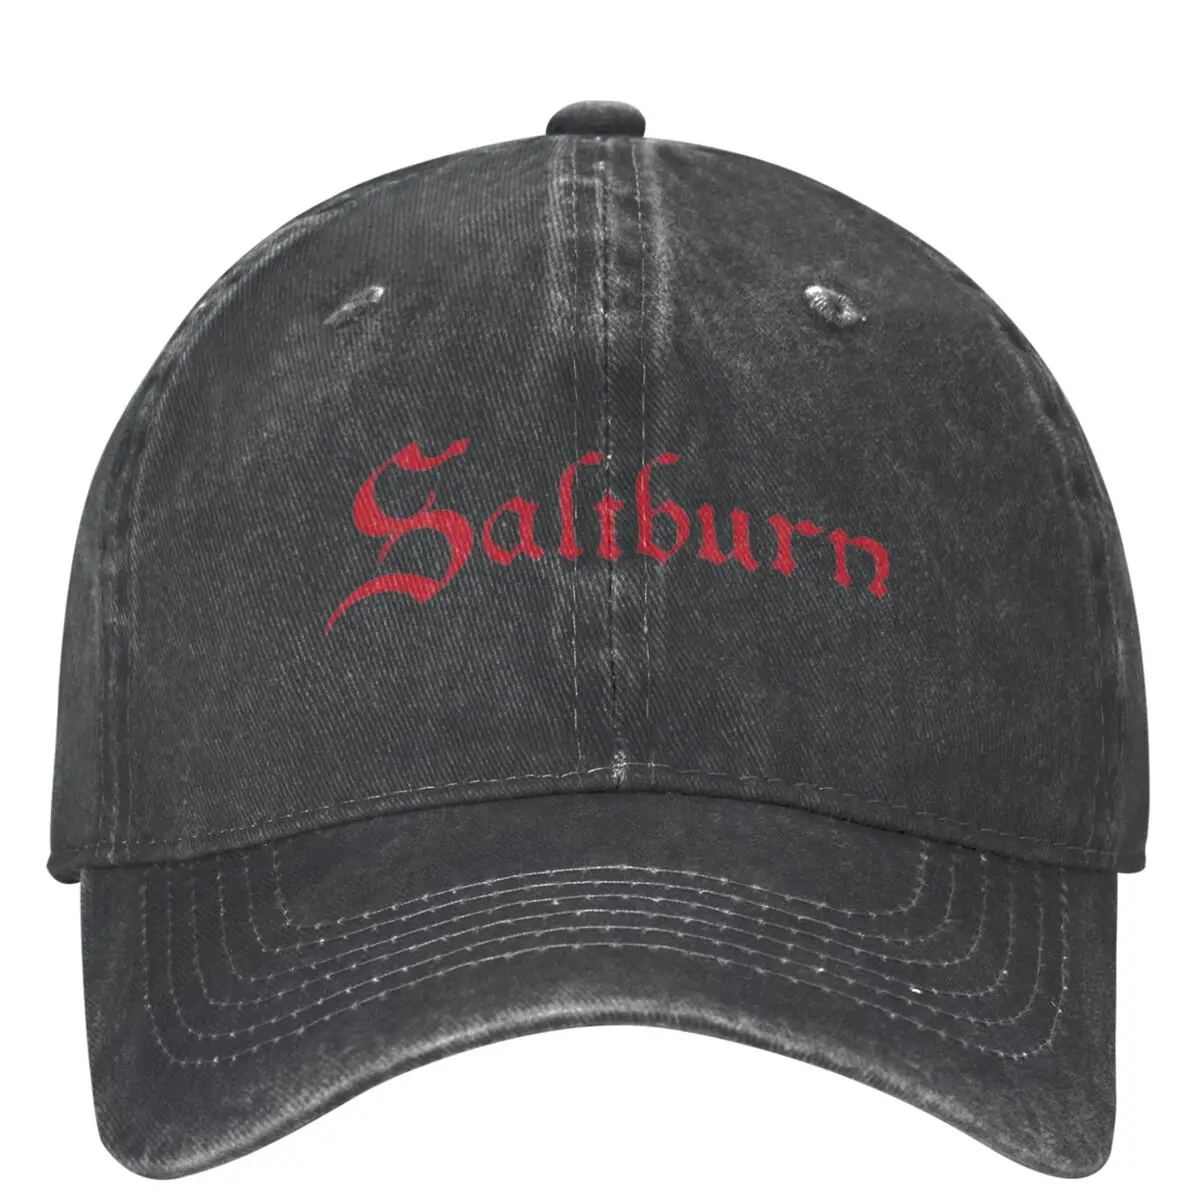 

Movie Saltburn Trucker Hat Merchandise Classic Distressed Washed Casquette Headwear for Men Women Summer Adjustable Fit Hats Cap